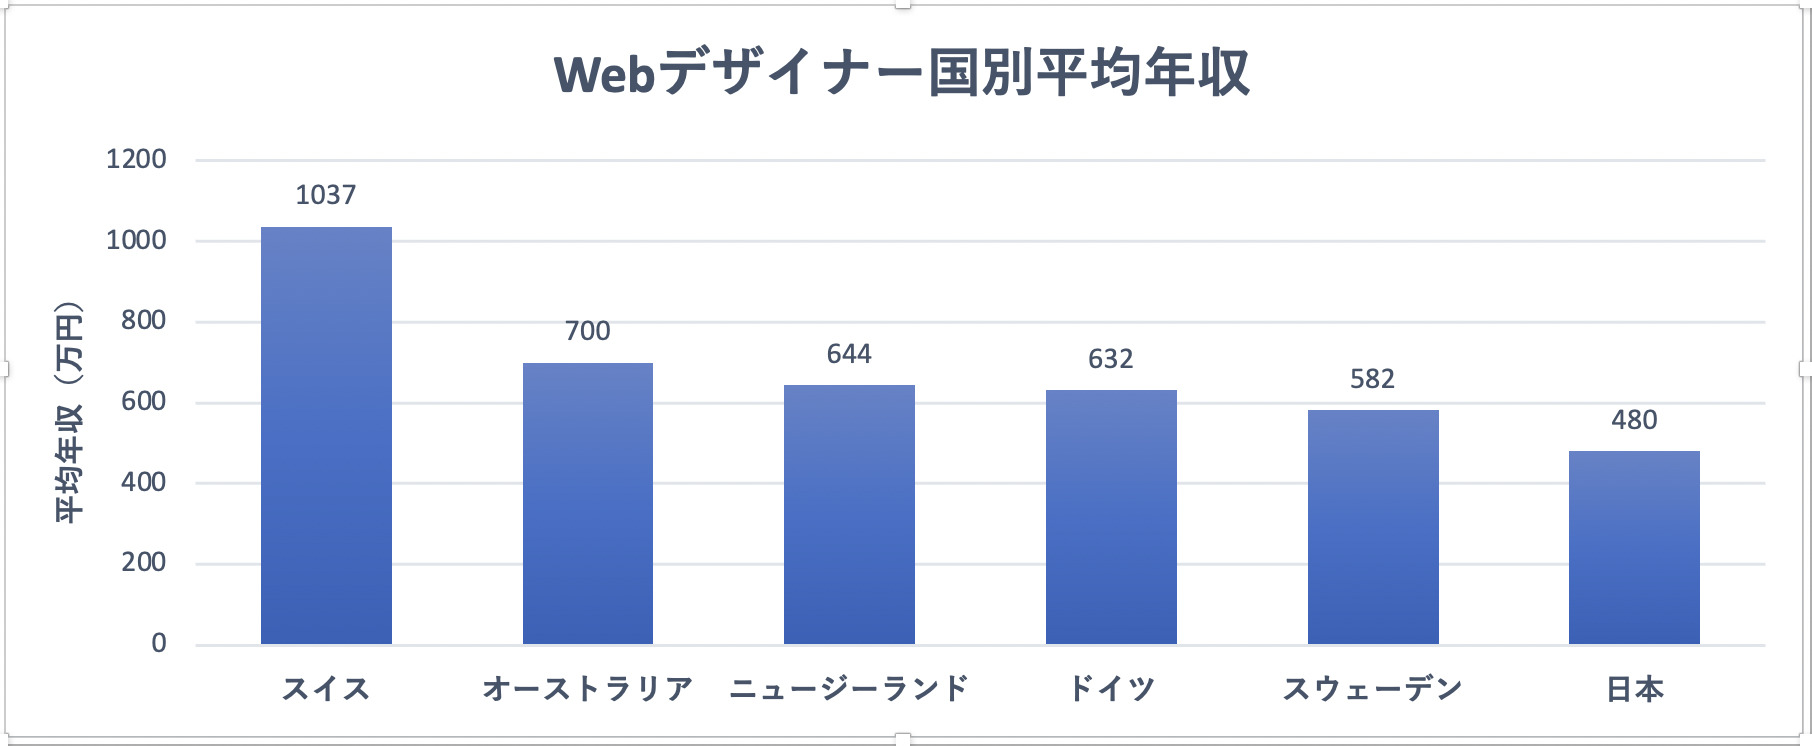 Webデザイナー国別平均収入